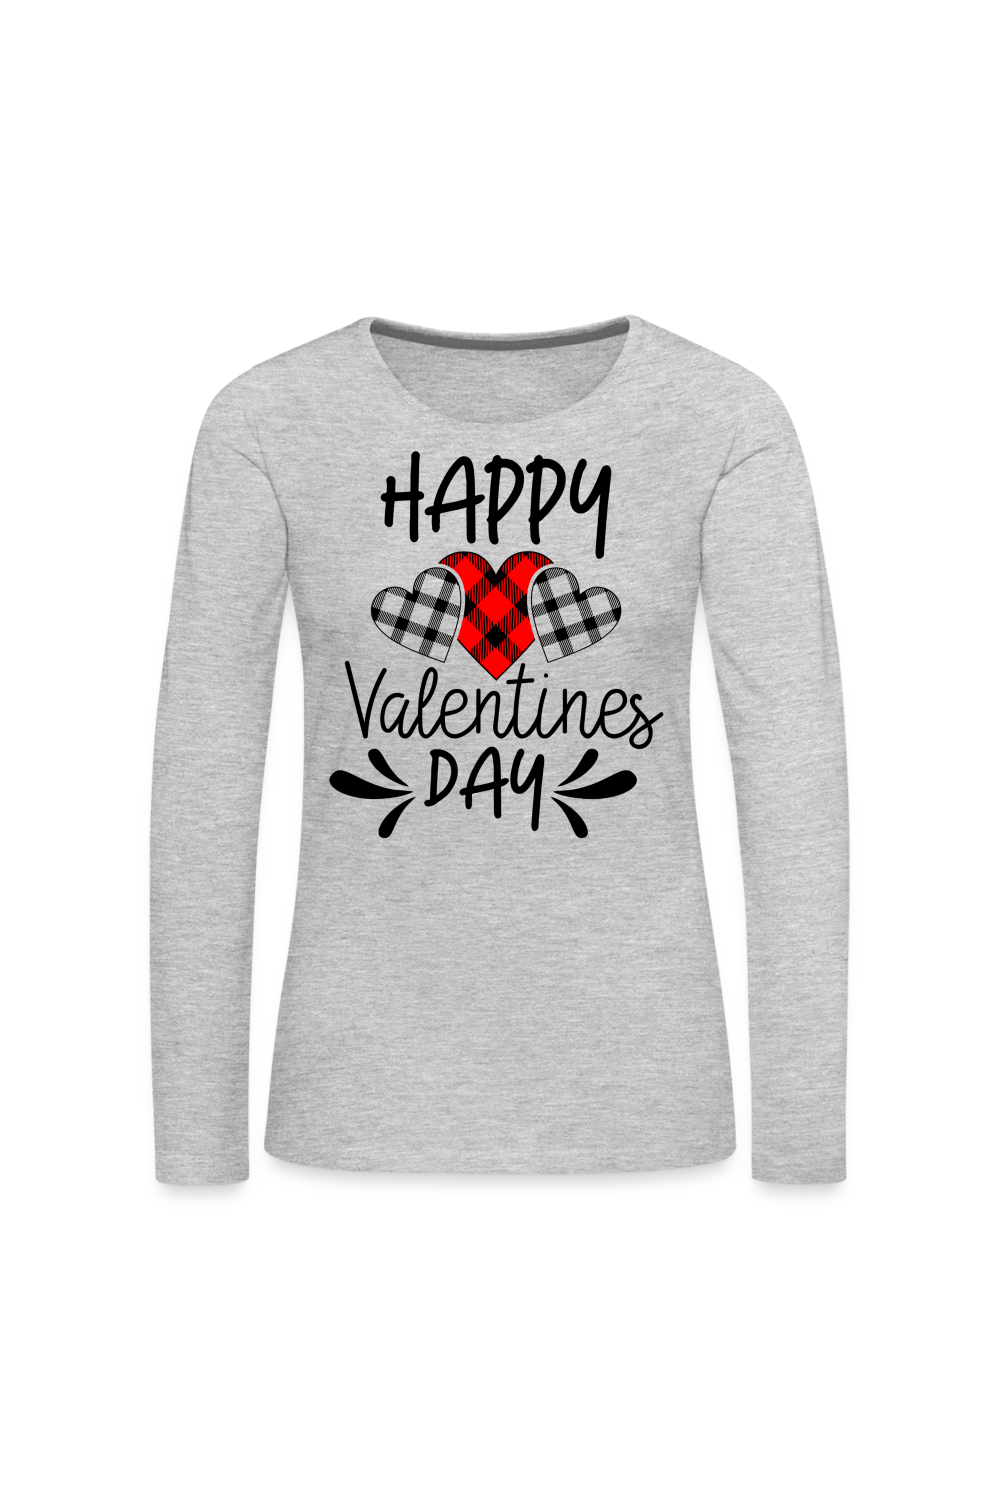 Women's Happy Valentine's Day Long Sleeve T-Shirt - heather gray